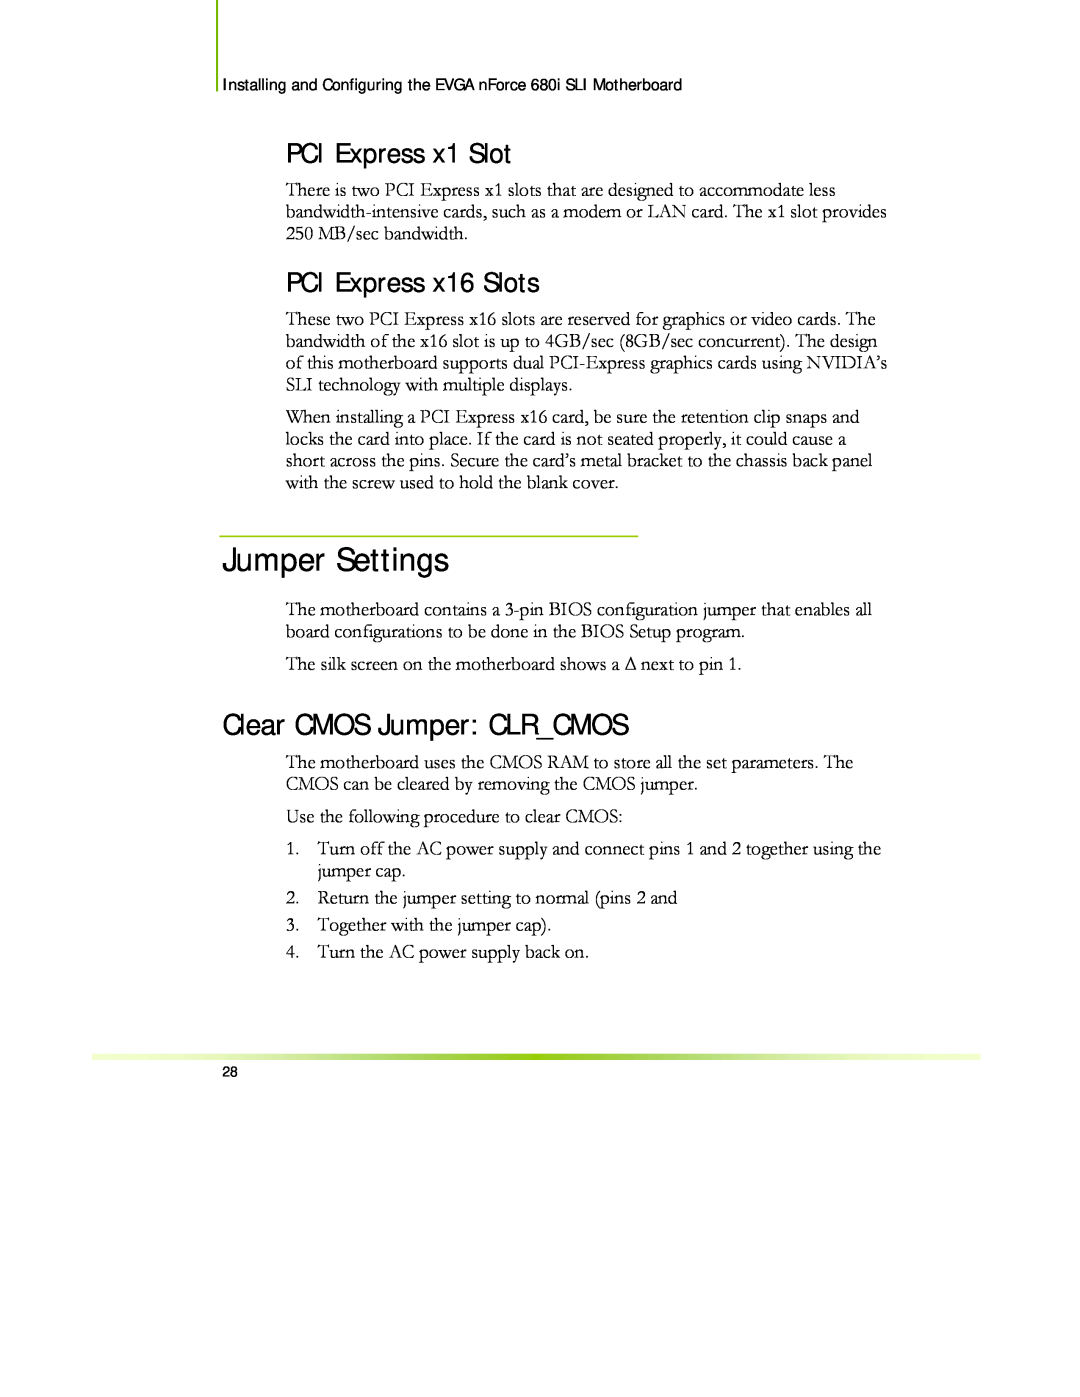 EVGA 122-CK-NF68-XX manual Jumper Settings, Clear CMOS Jumper CLRCMOS, PCI Express x1 Slot, PCI Express x16 Slots 